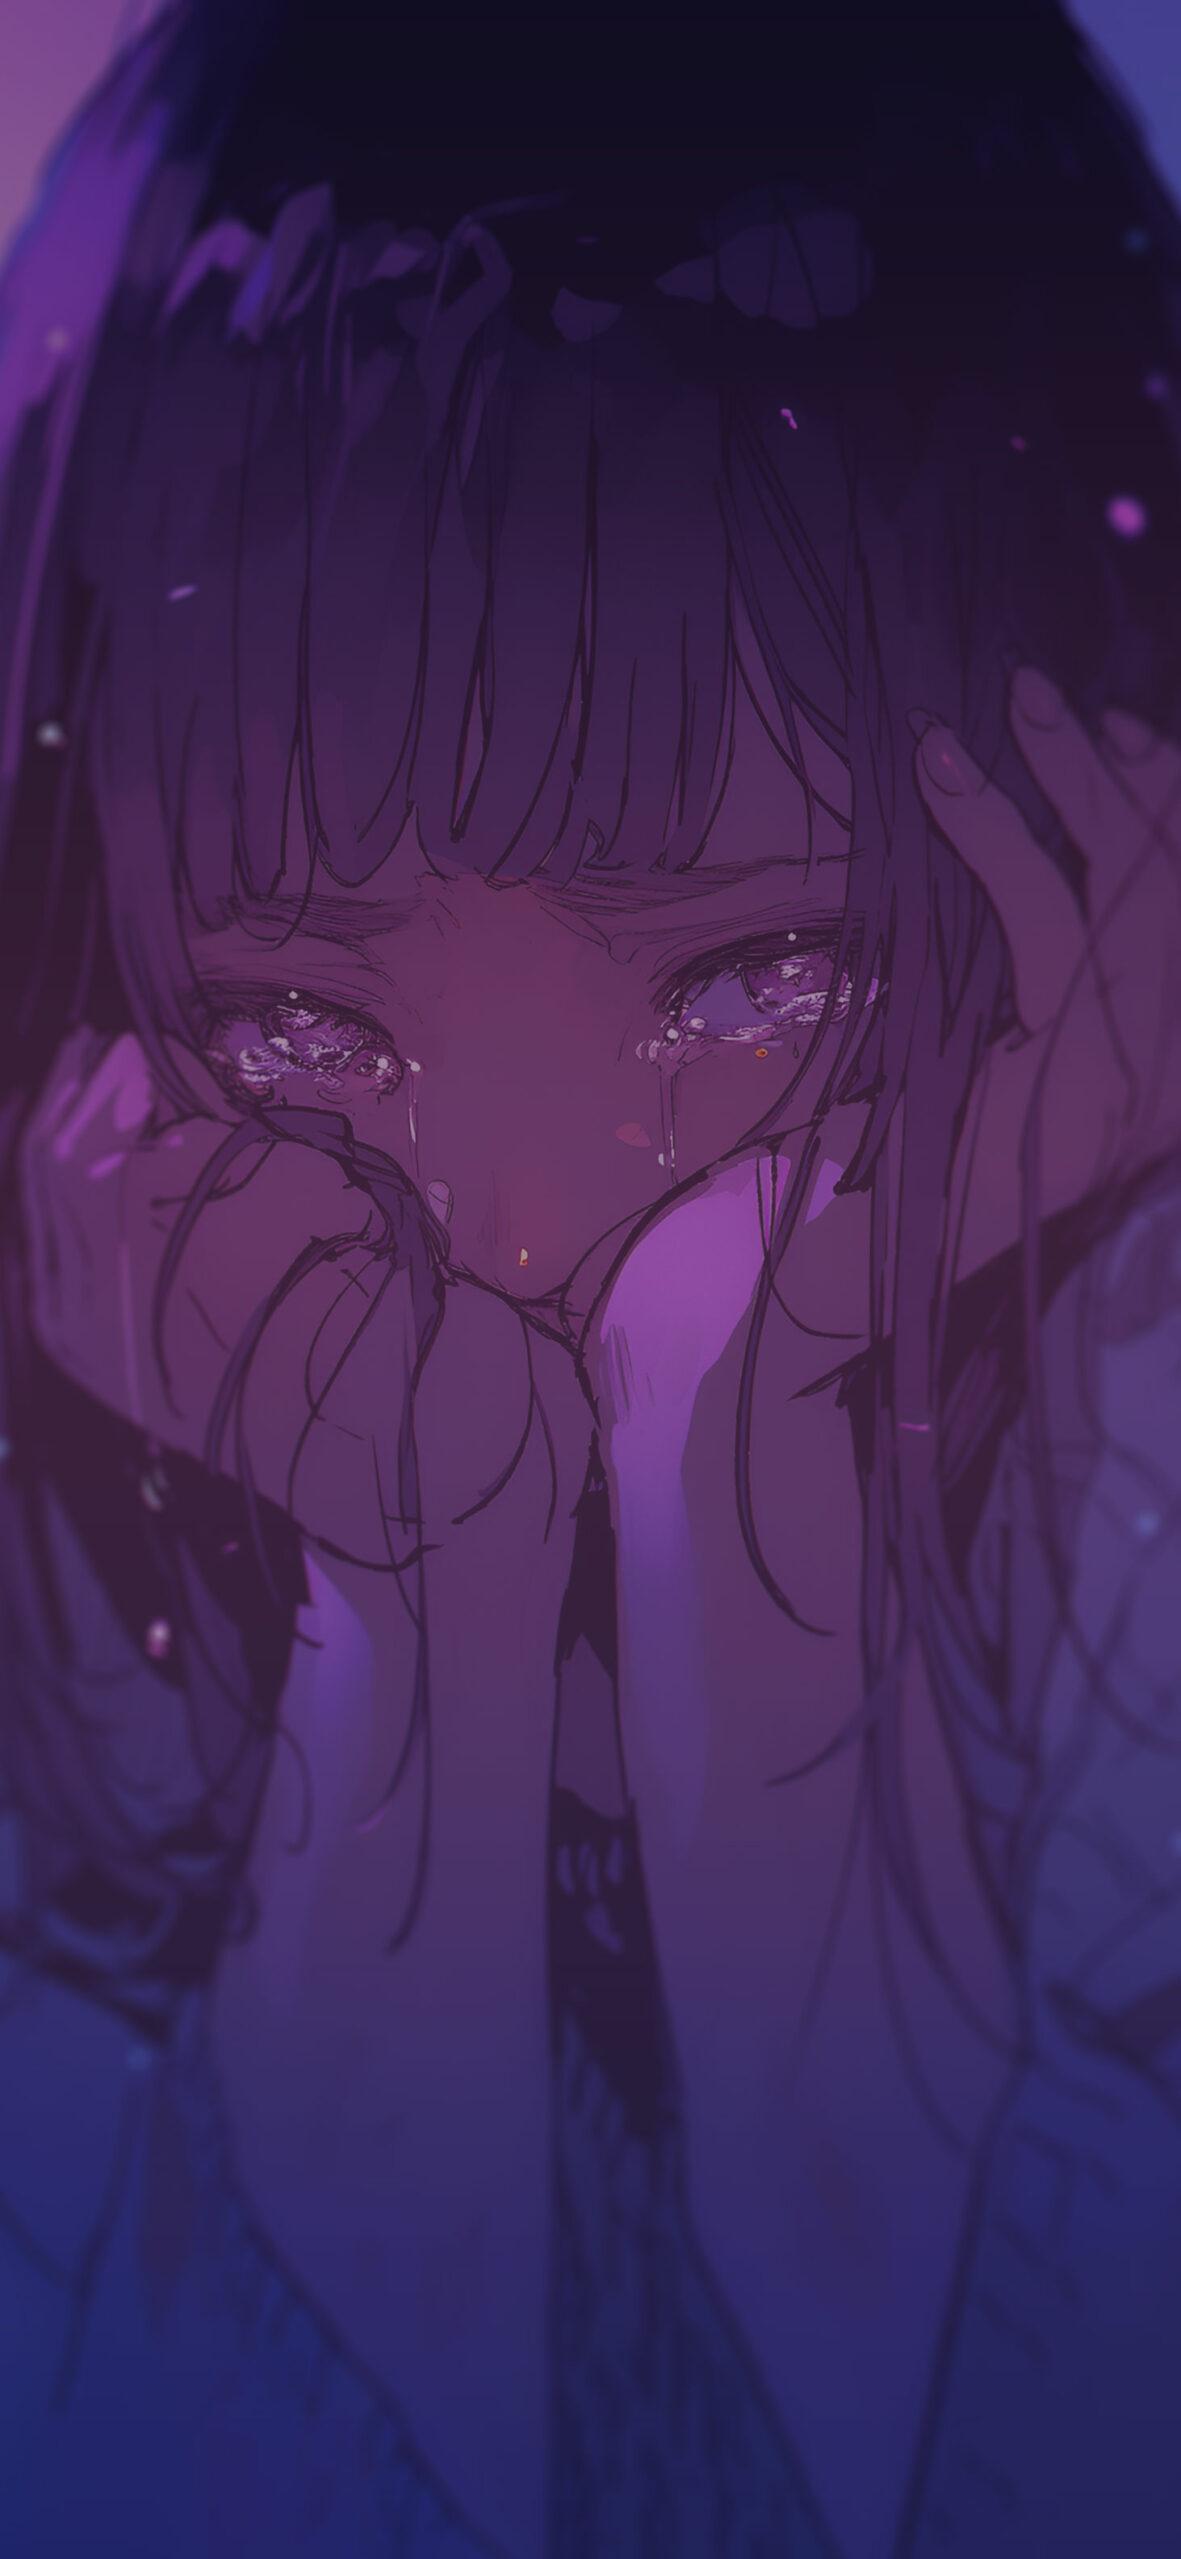 Crying Anime Girl Purple Wallpaper Sad For iPhone